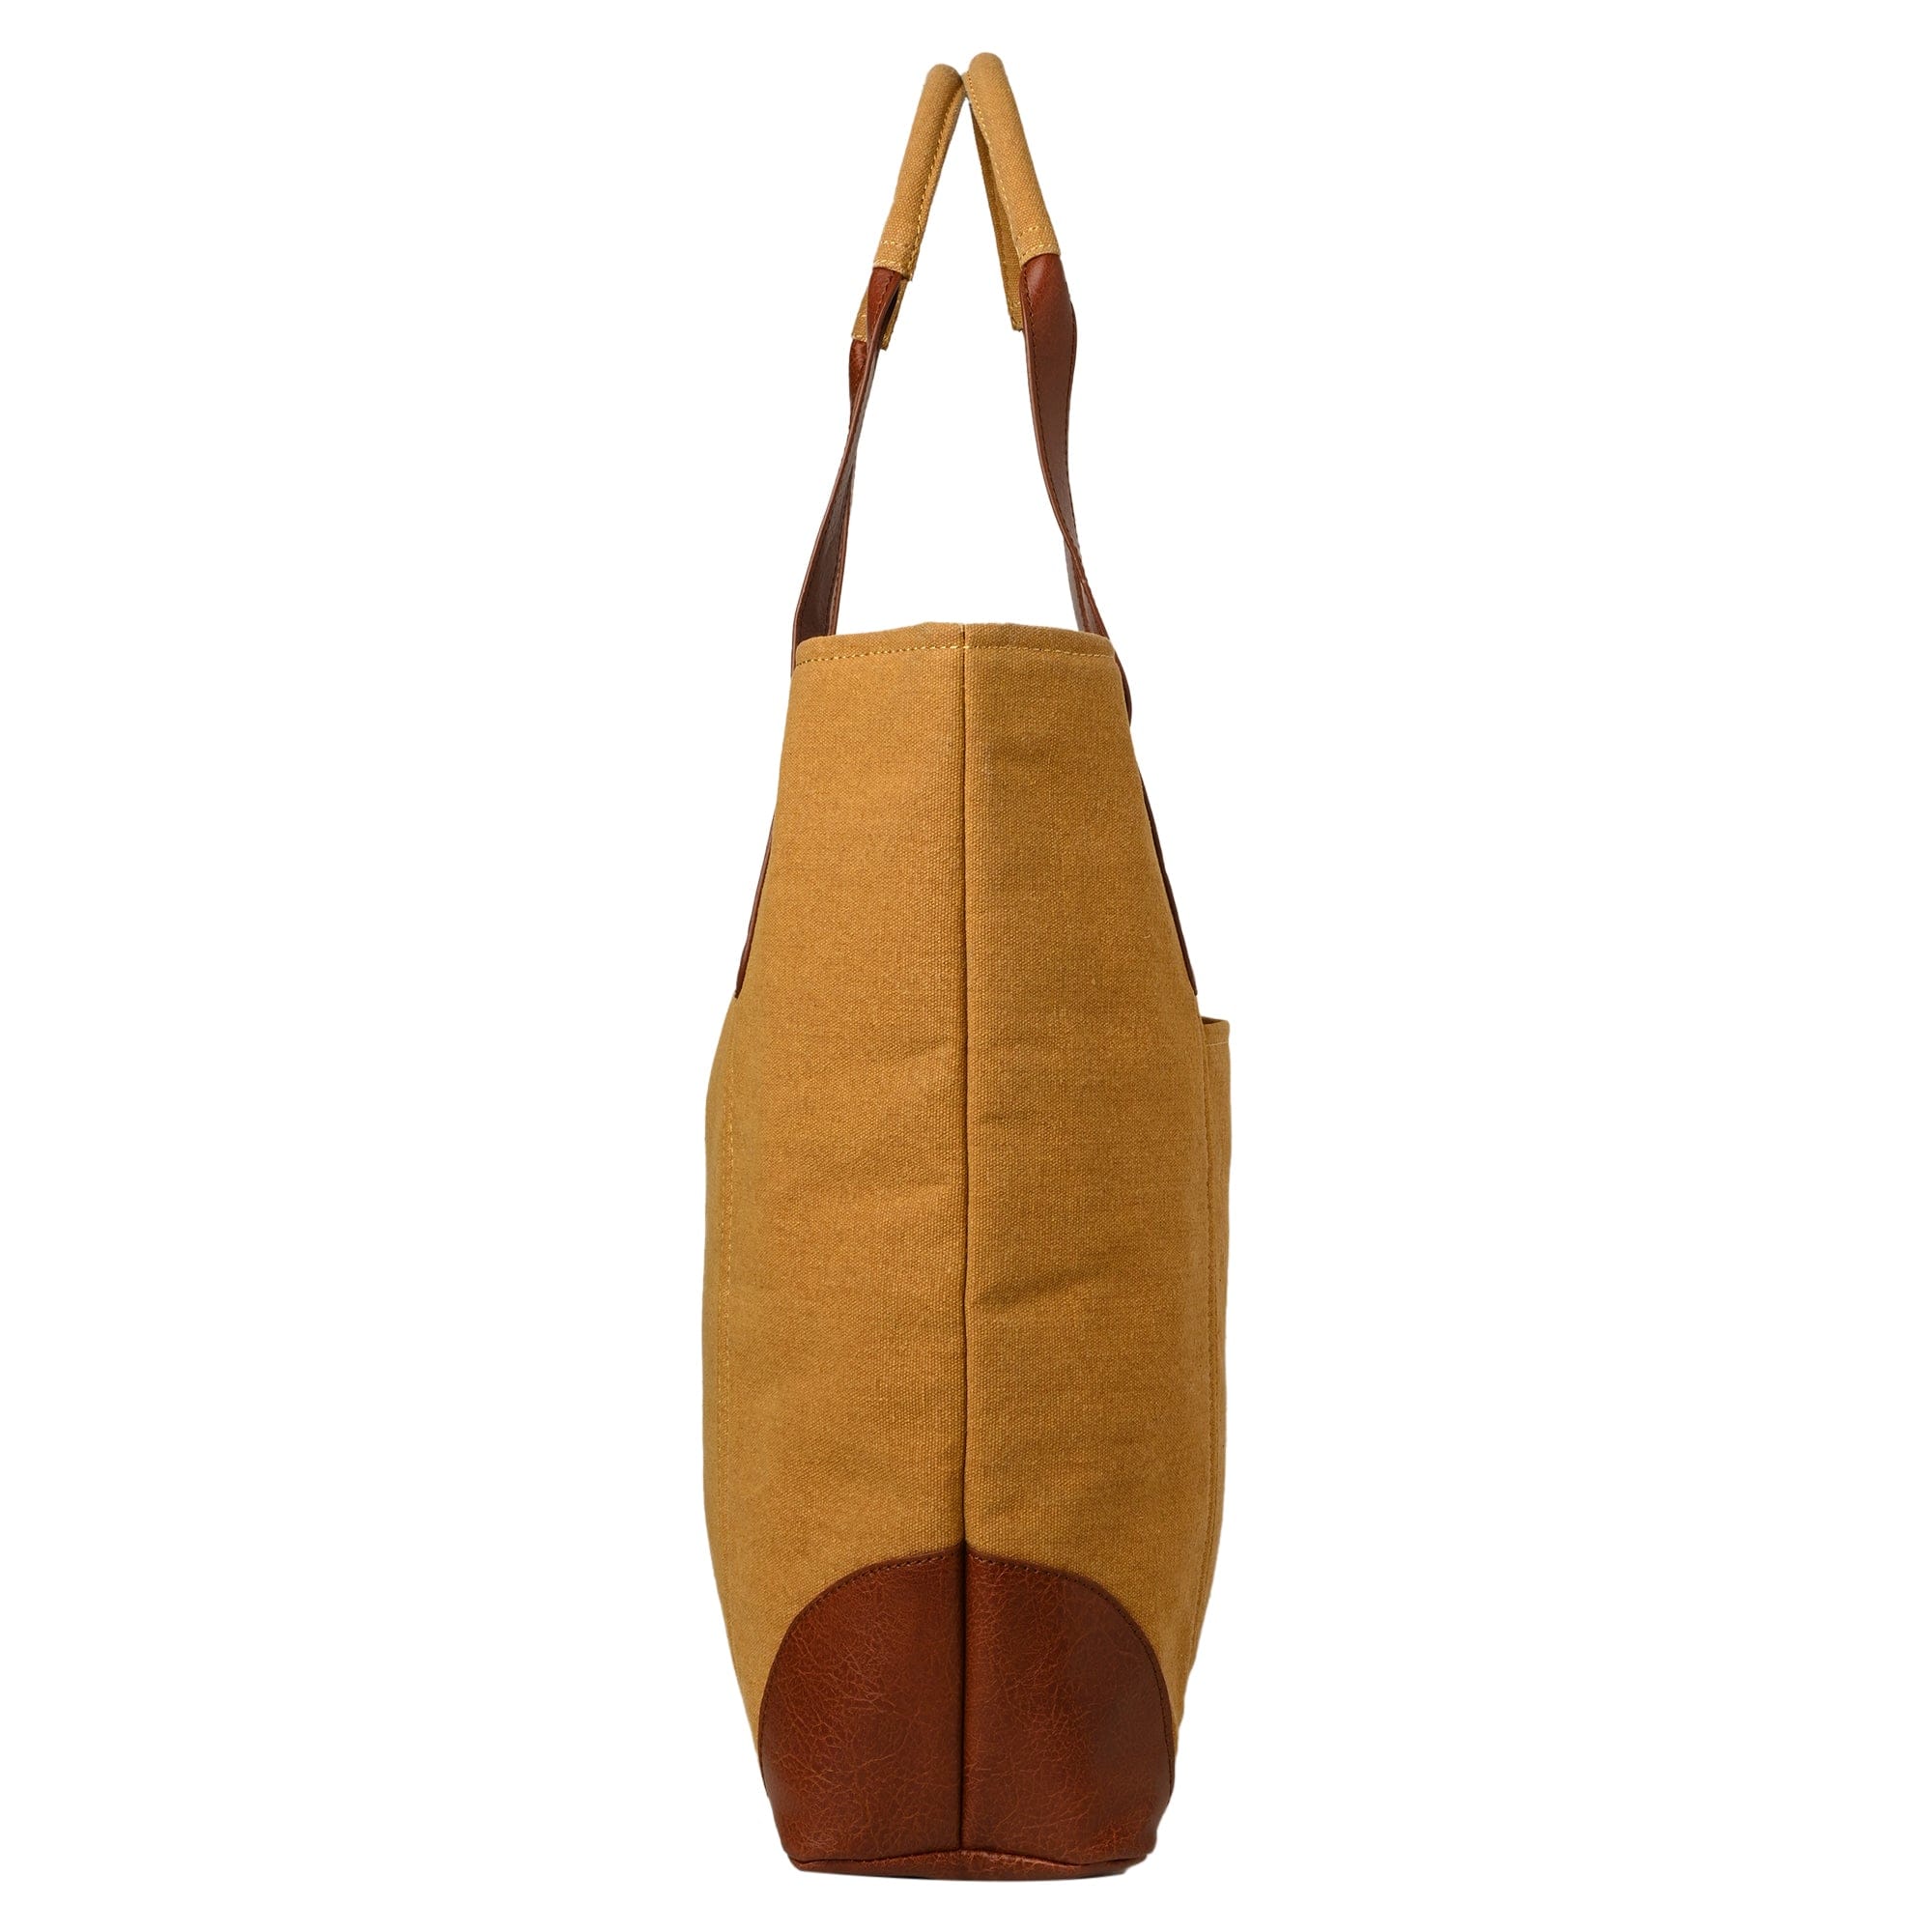 Mona-B Bag Mona B Large Canvas Handbag for Women | Tote Bag for Grocery, Shopping, Travel | Stylish Vintage Shoulder Bags for Women (Mustard)